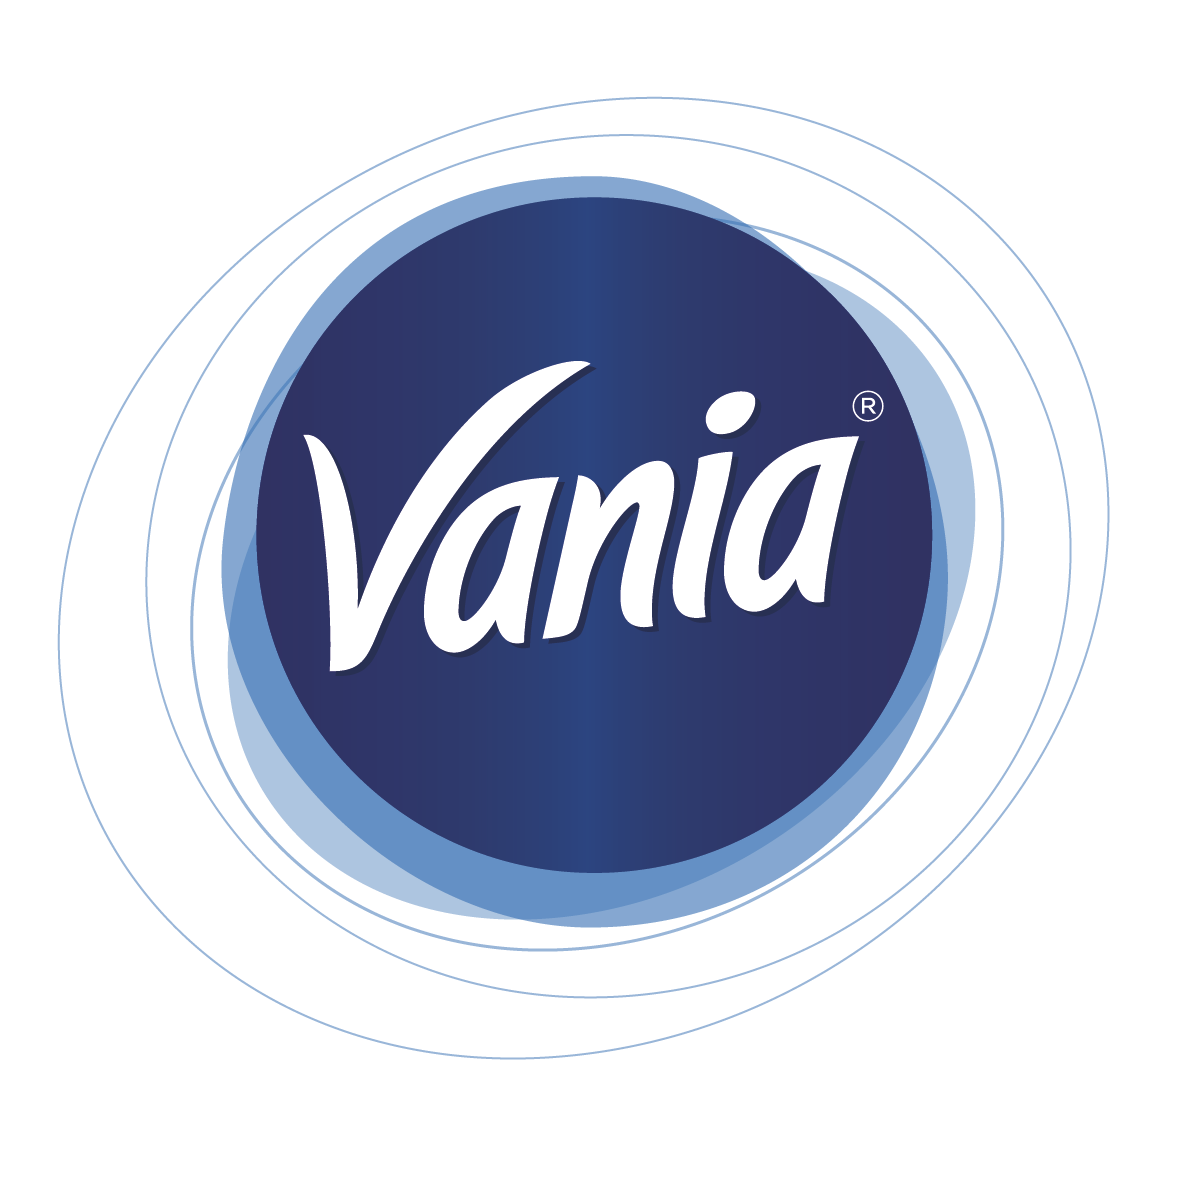 www.vania.com